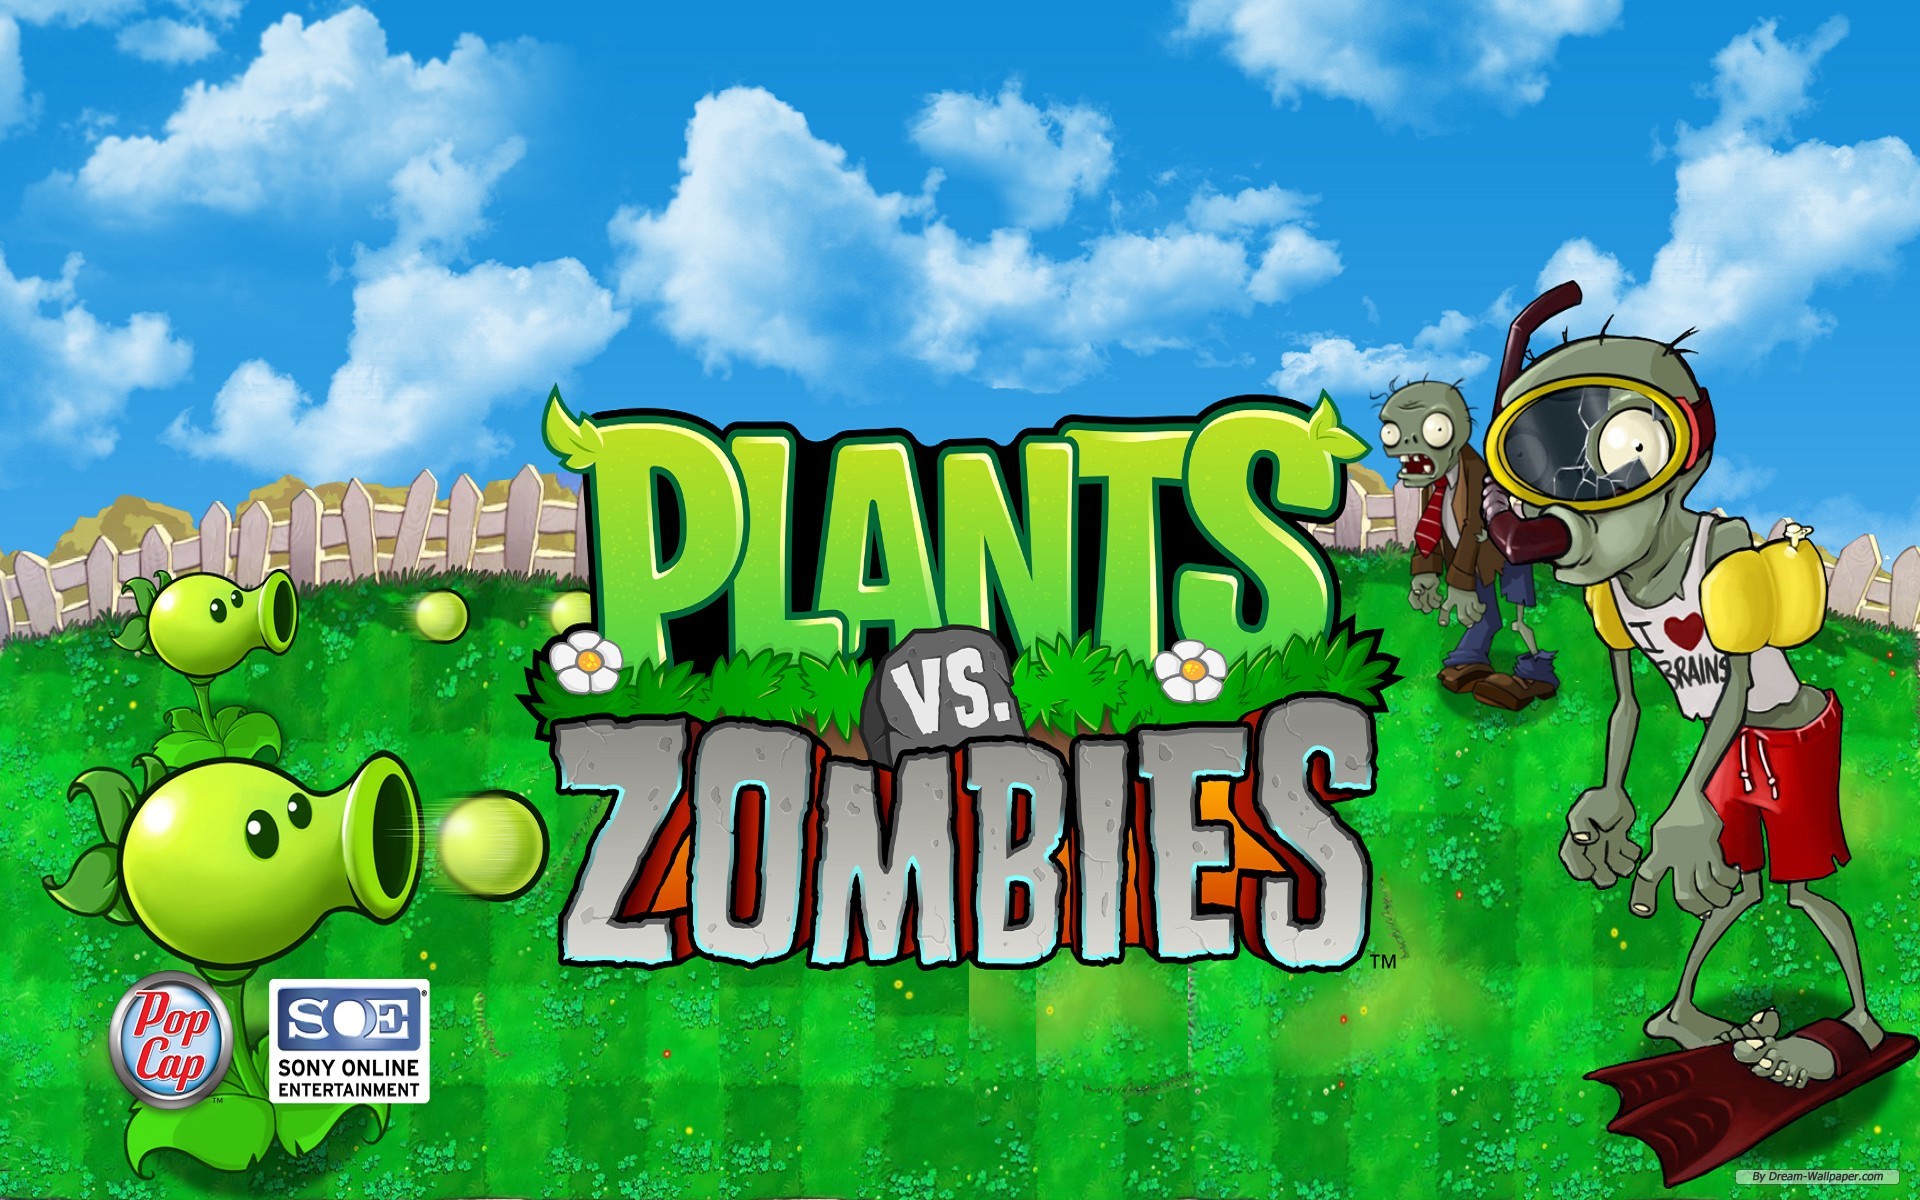 plants vs zombies 2 desktop free download full version